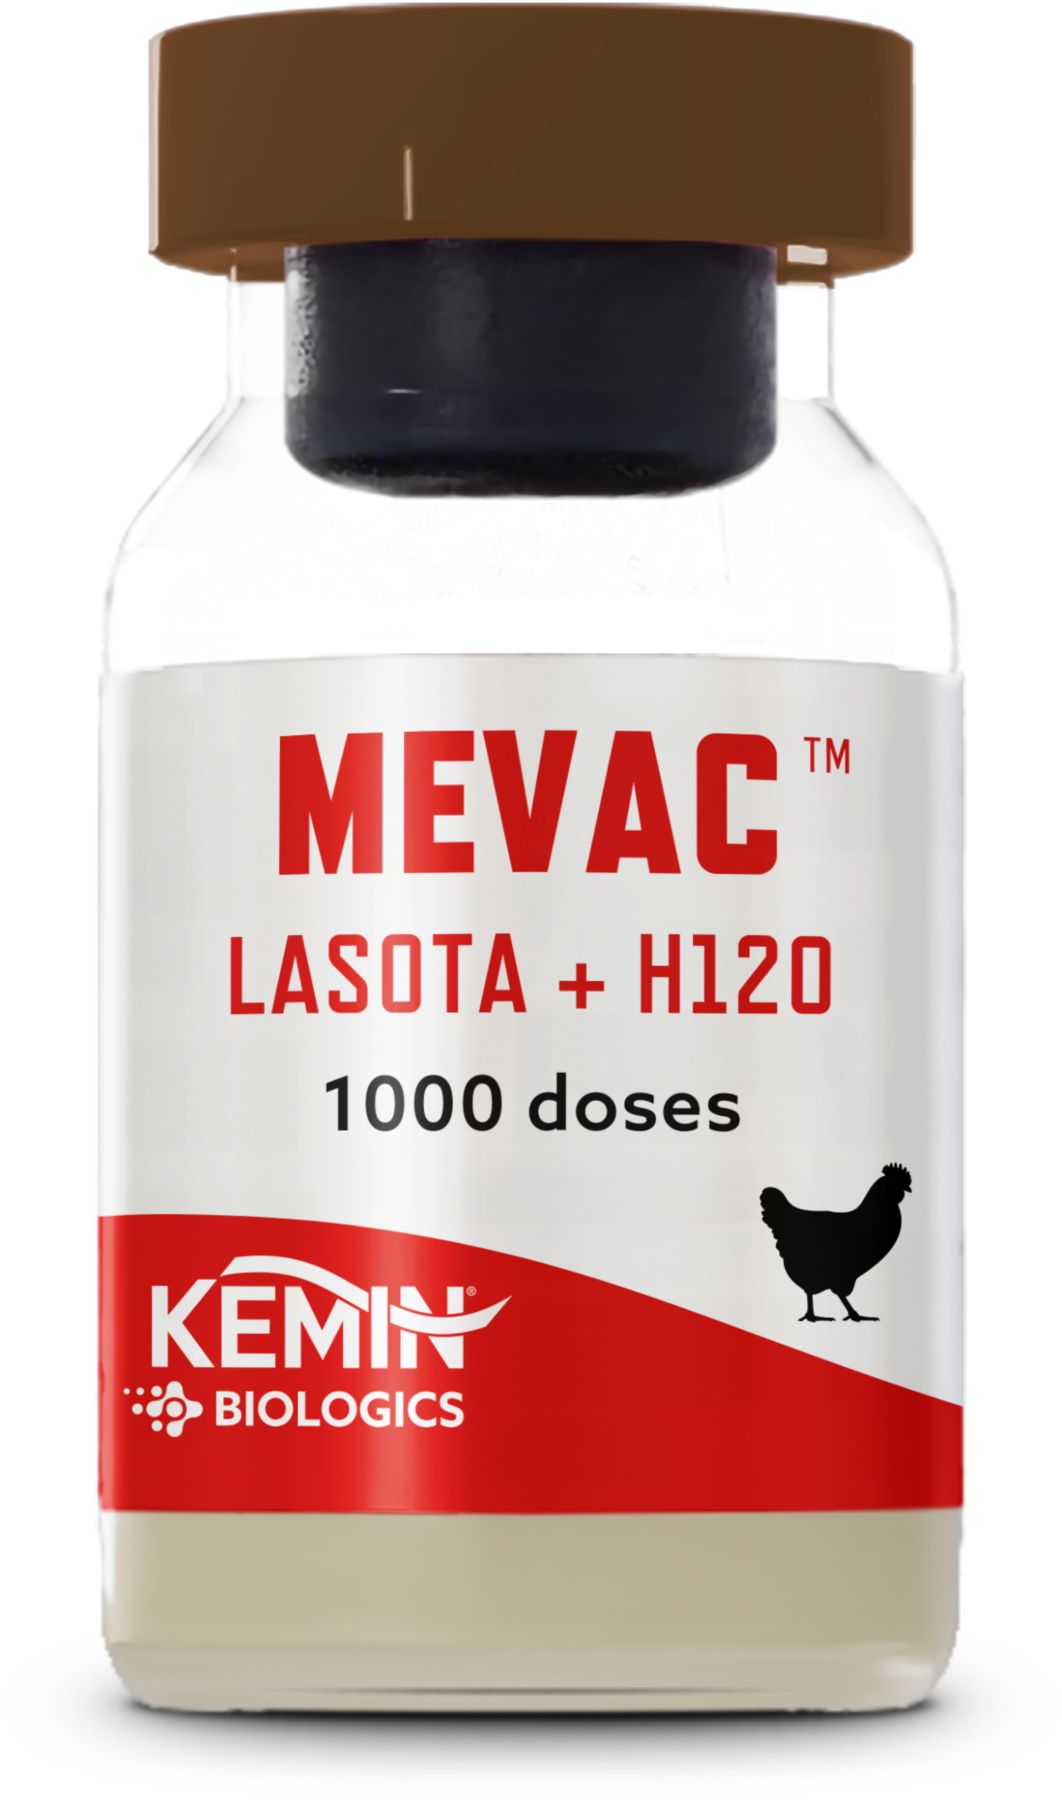 MEVAC LASOTA H120 small label mockup